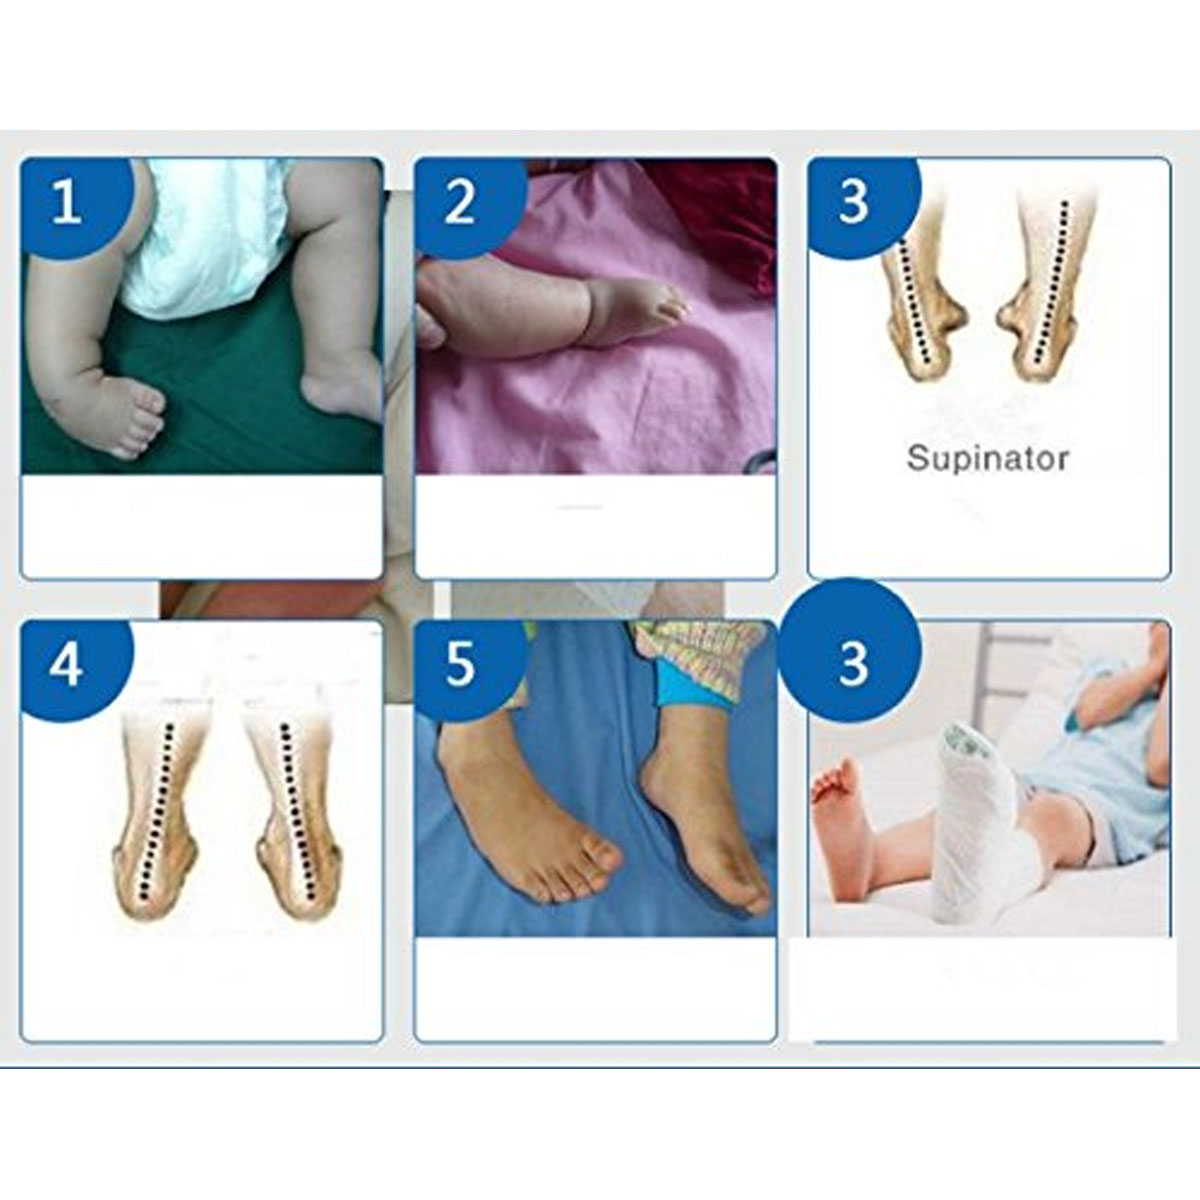 Medical Ankle Splint Boot Brace Support Tendinitis Plantar Fasciitis Heel Foot Splint For Child Kids